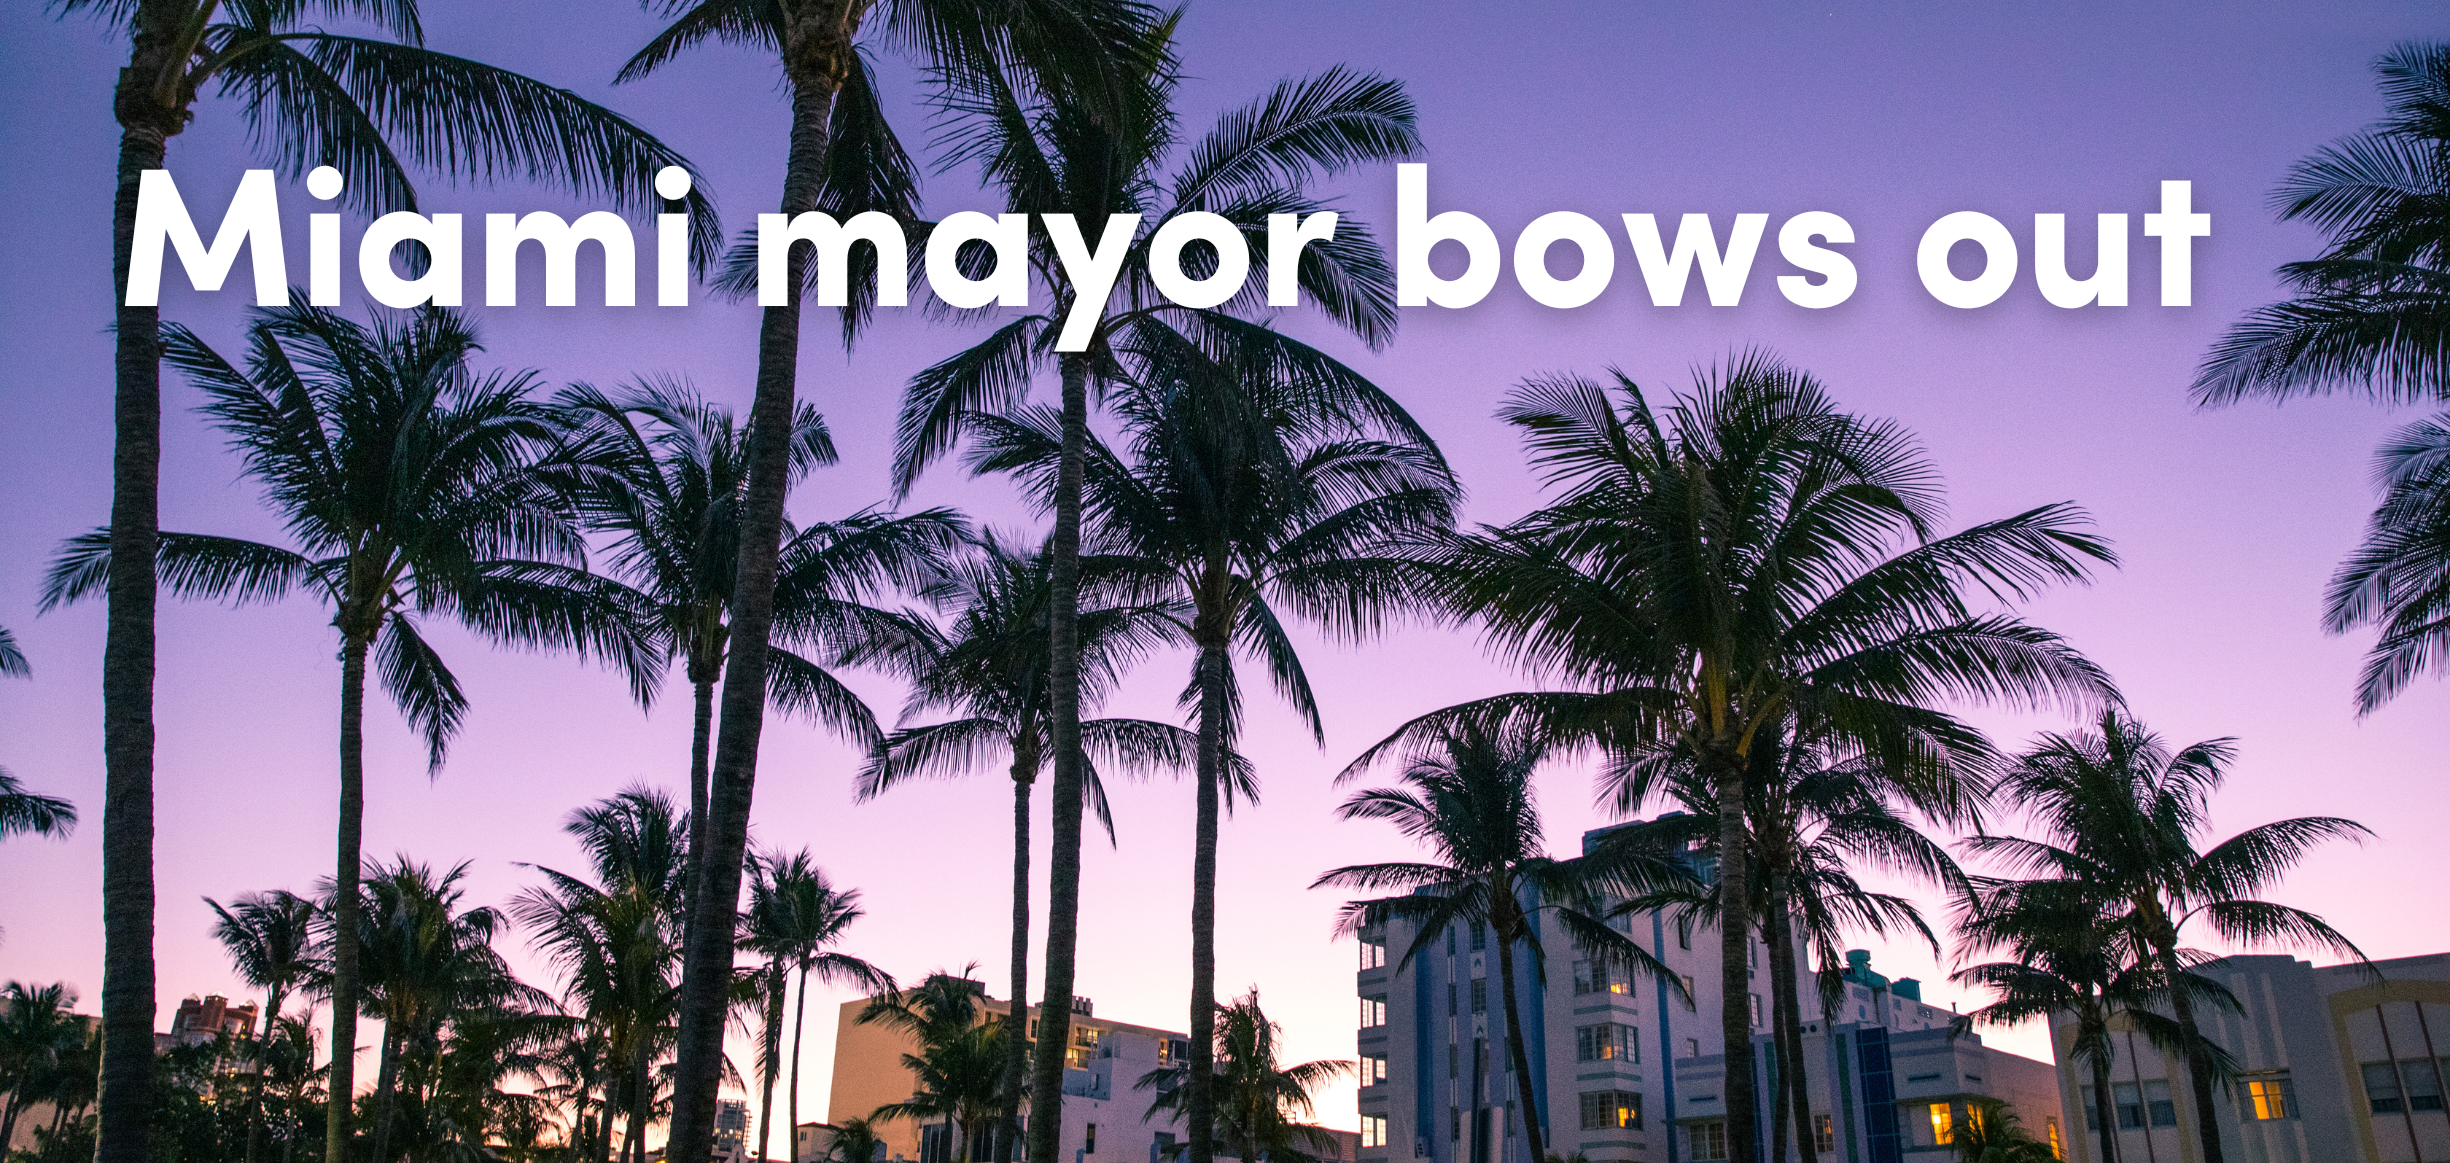 Miami Mayor Francis Saurez has suspended his campaign for the U.S. presidency